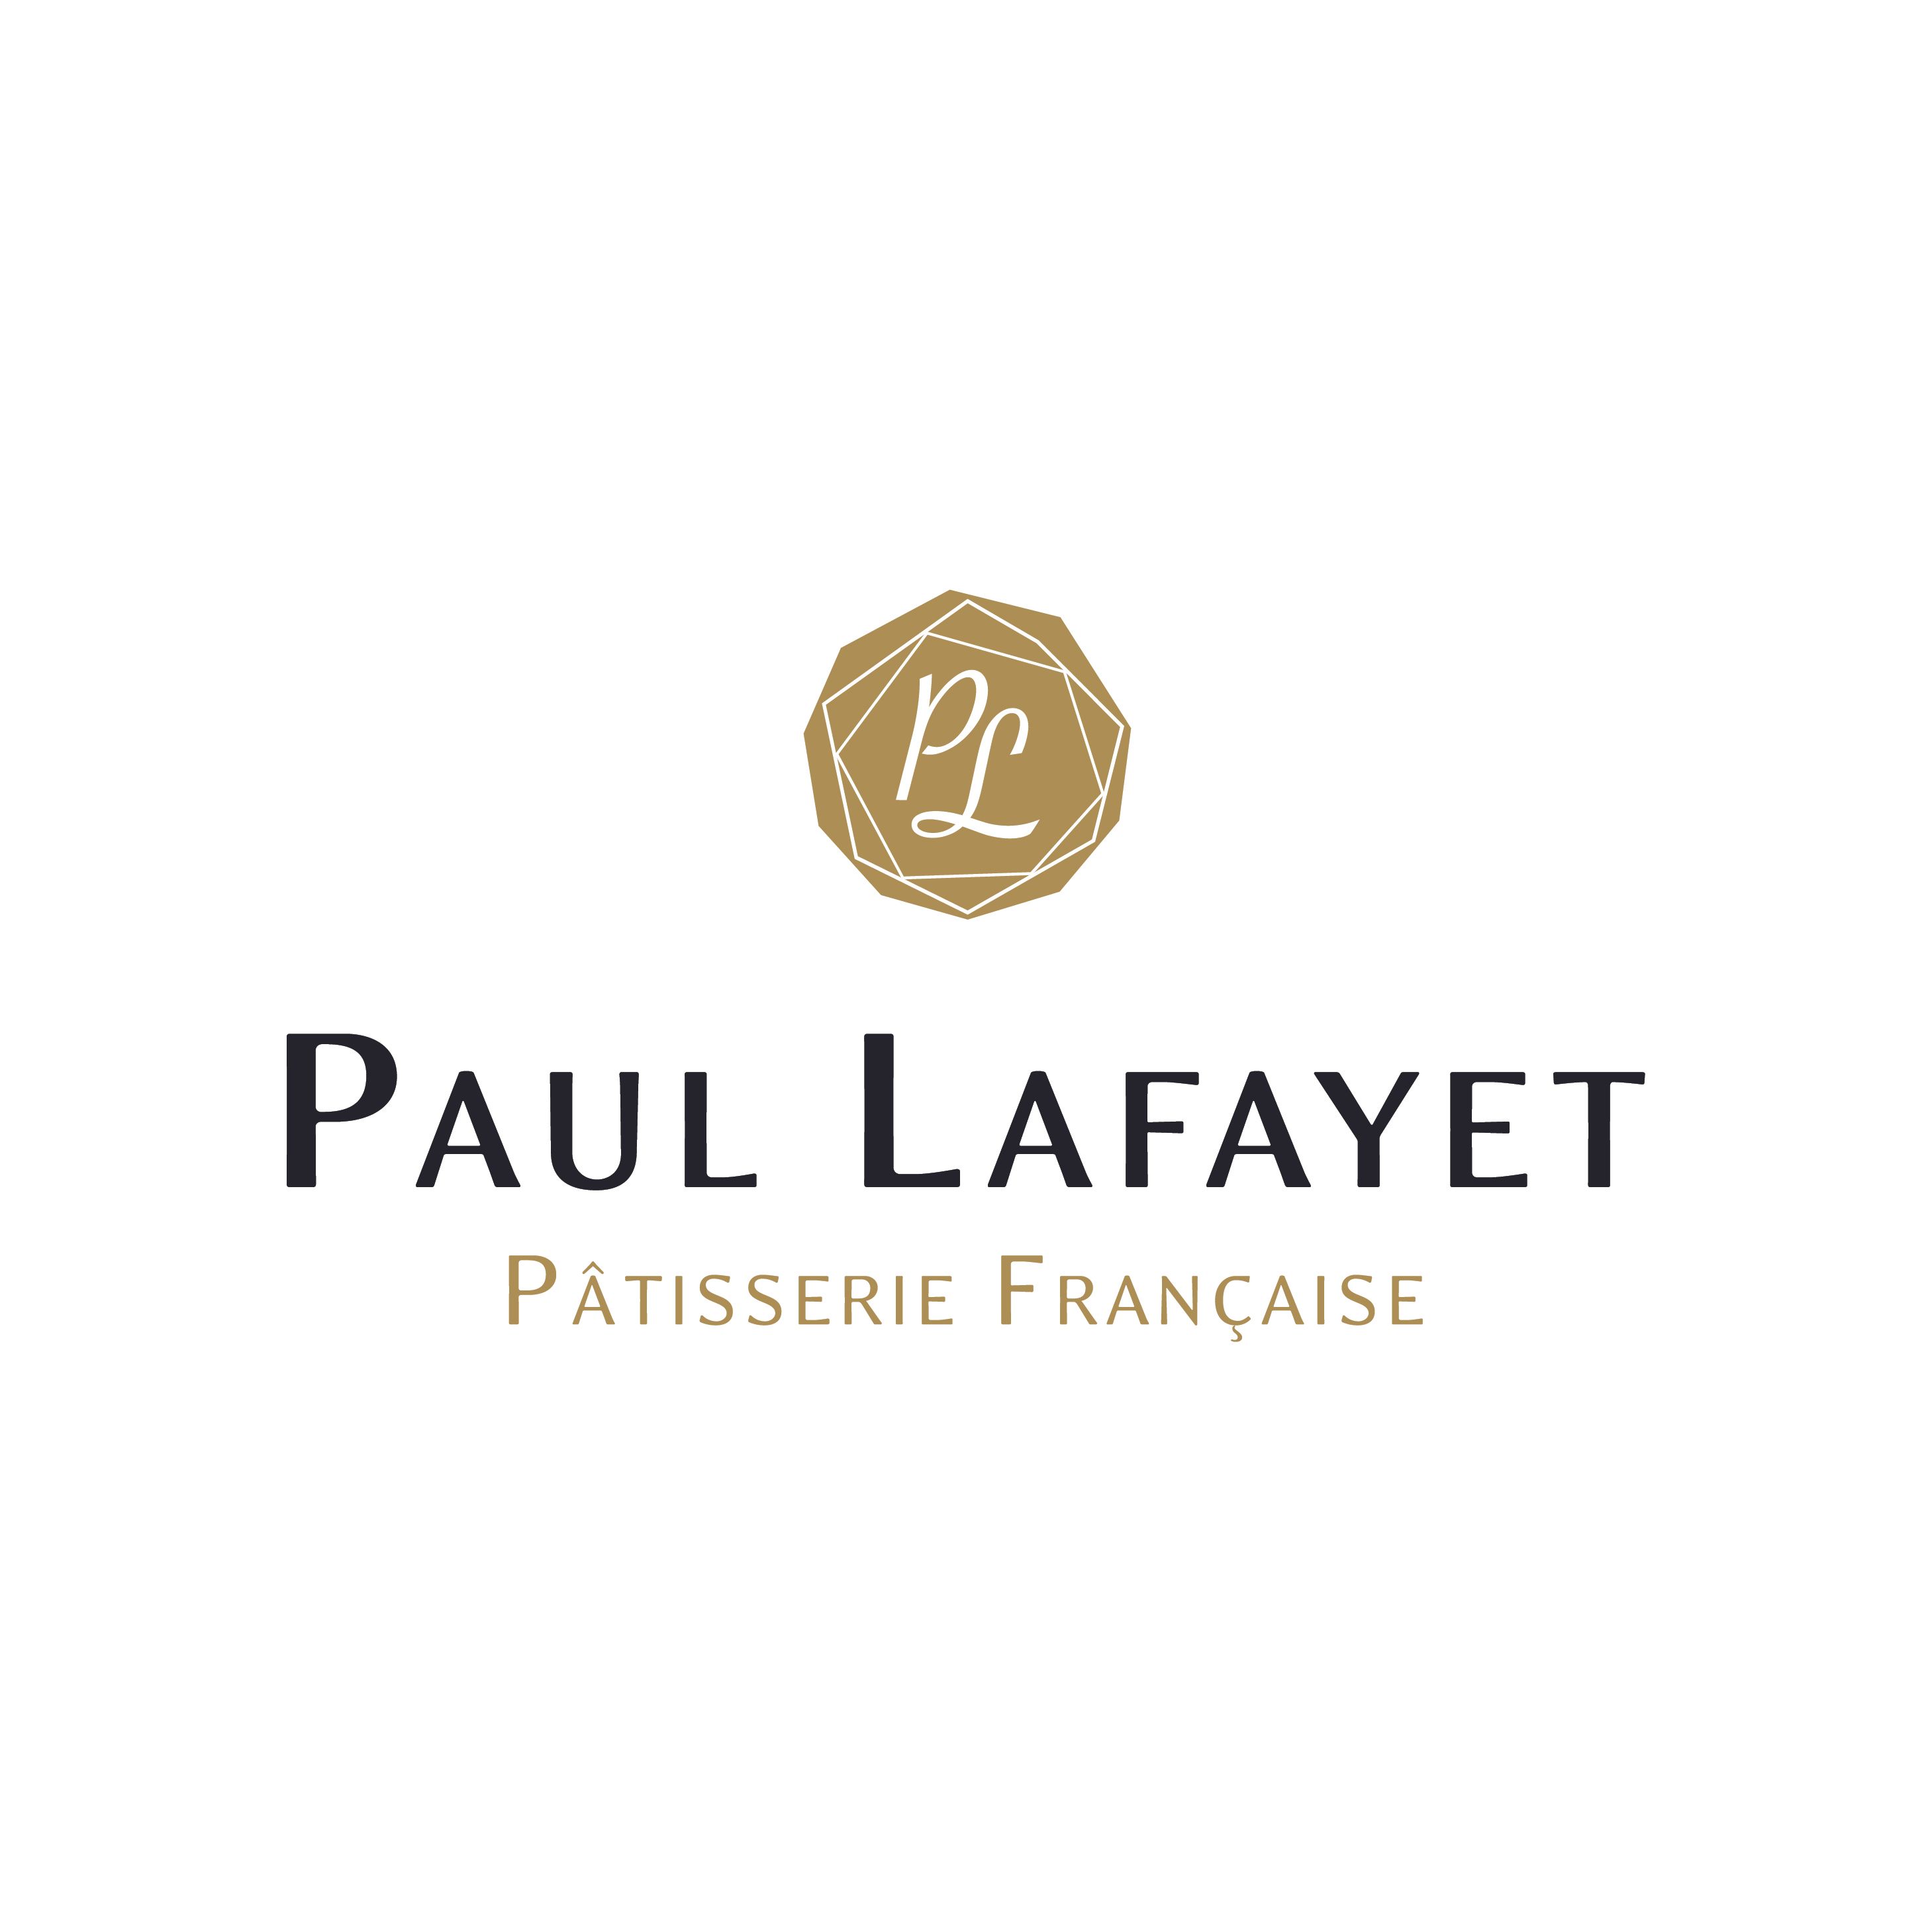 Paul Lafayet